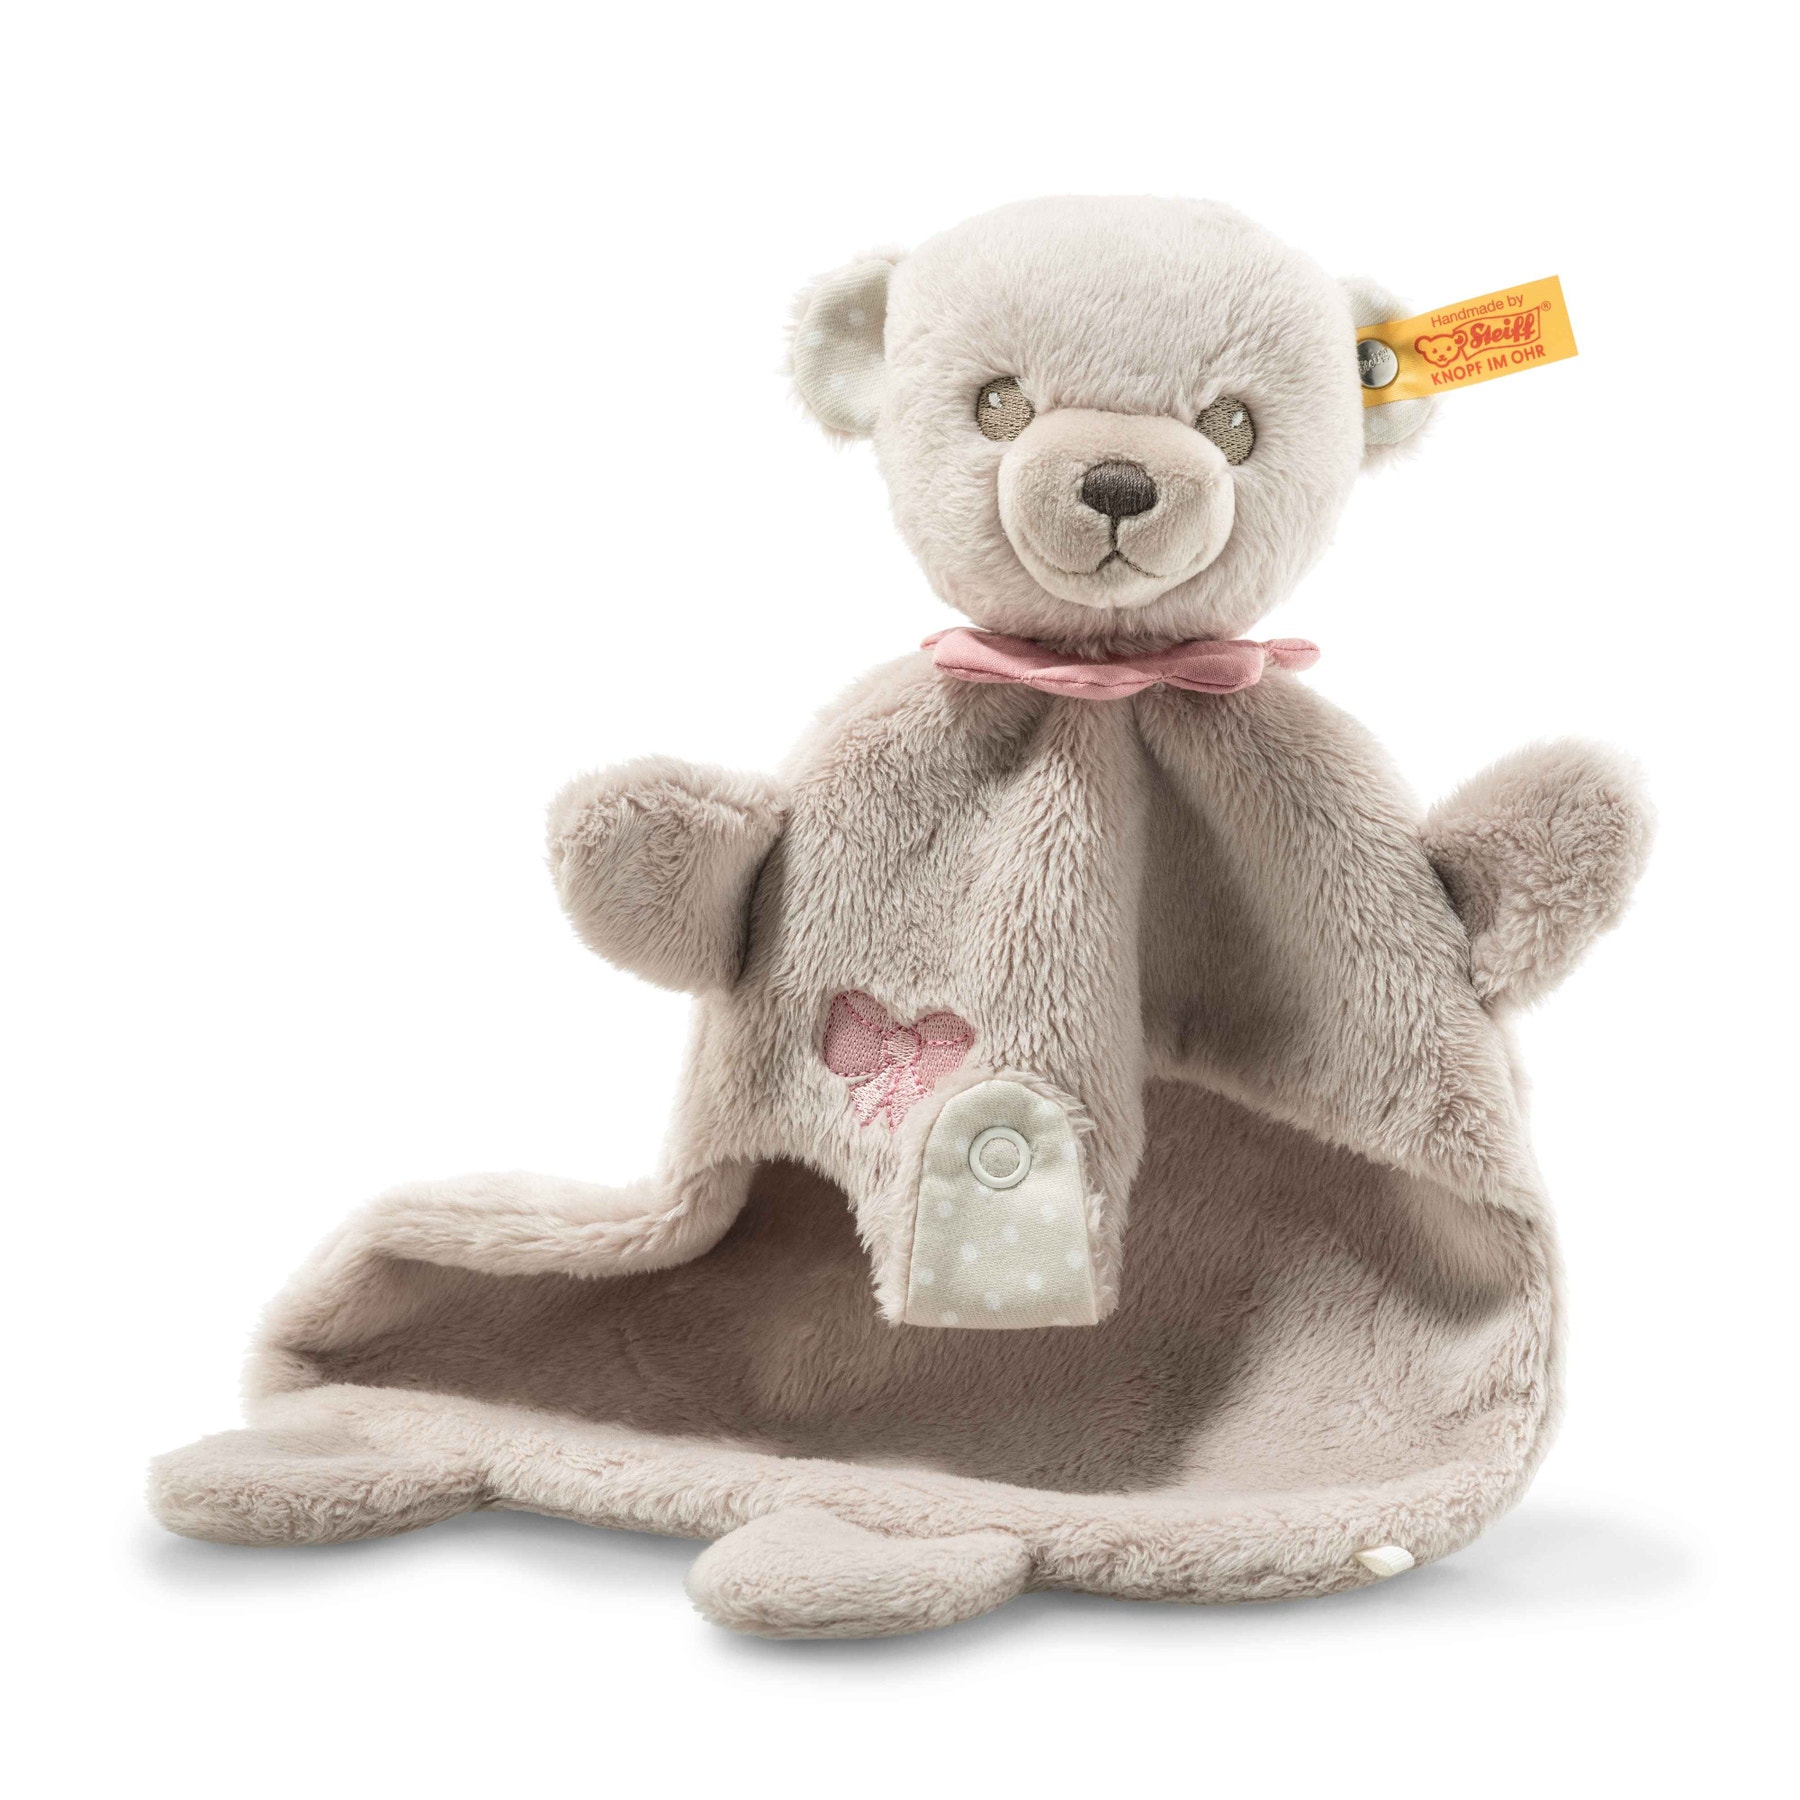 Hello Baby Lea Teddy bear comforter in gift box